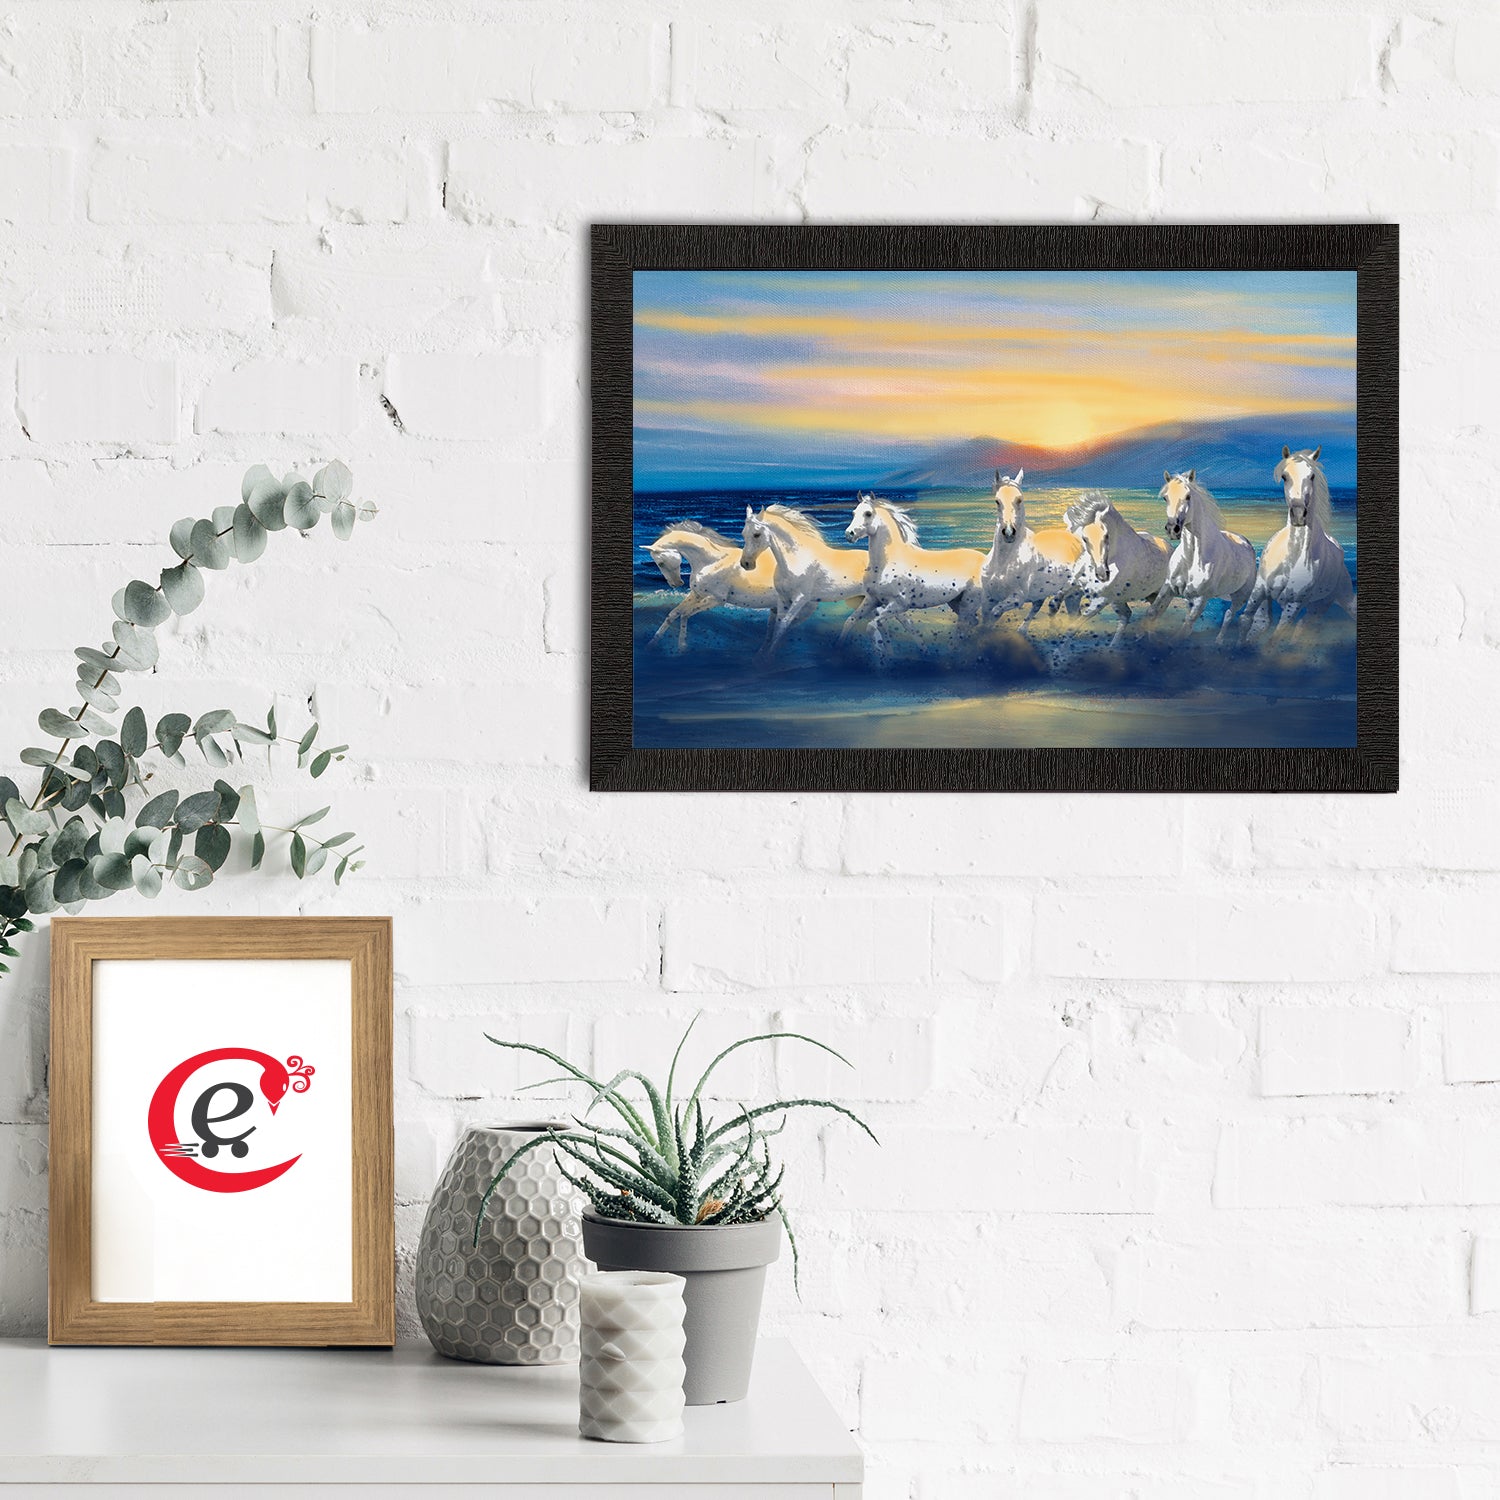 7 White Running Horses Painting Digital Printed Animal Wall Art 1